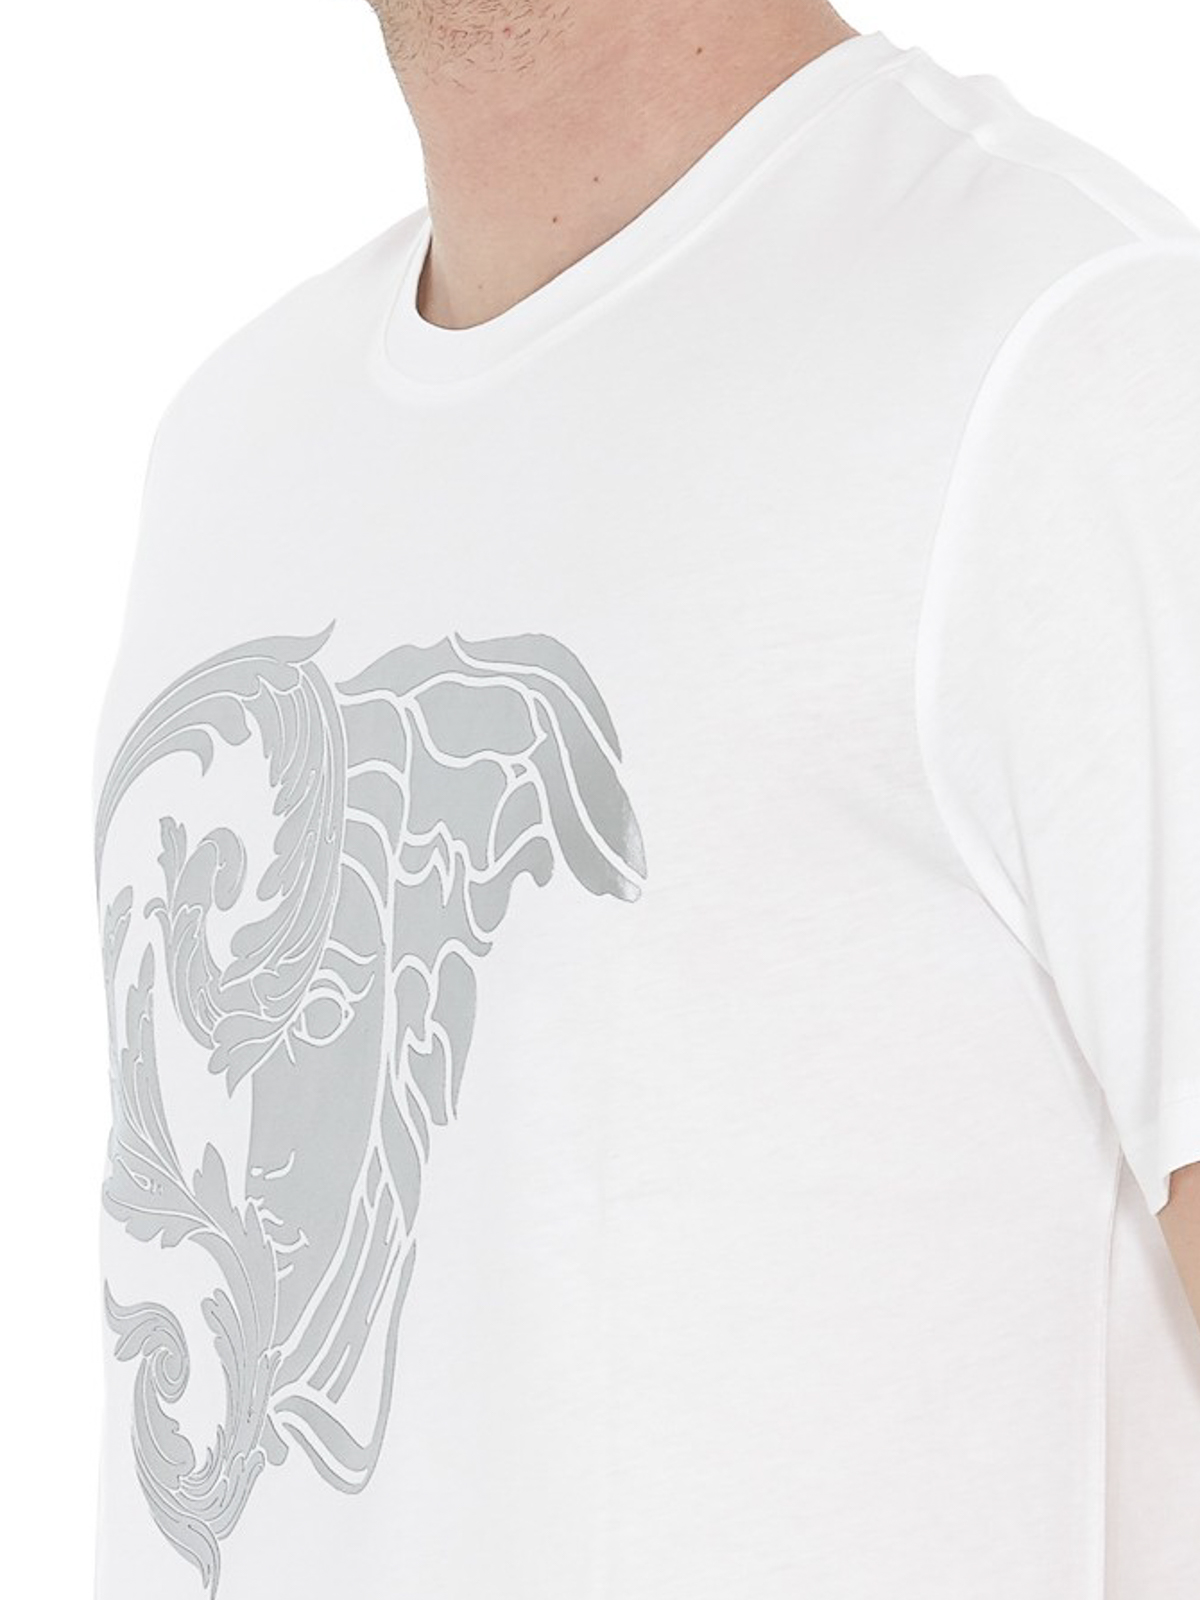 Haarvaten Aap Laatste T-shirts Versace Collection - Silver Medusa head print white cotton T-shirt  - V800683RVJ00612V7001